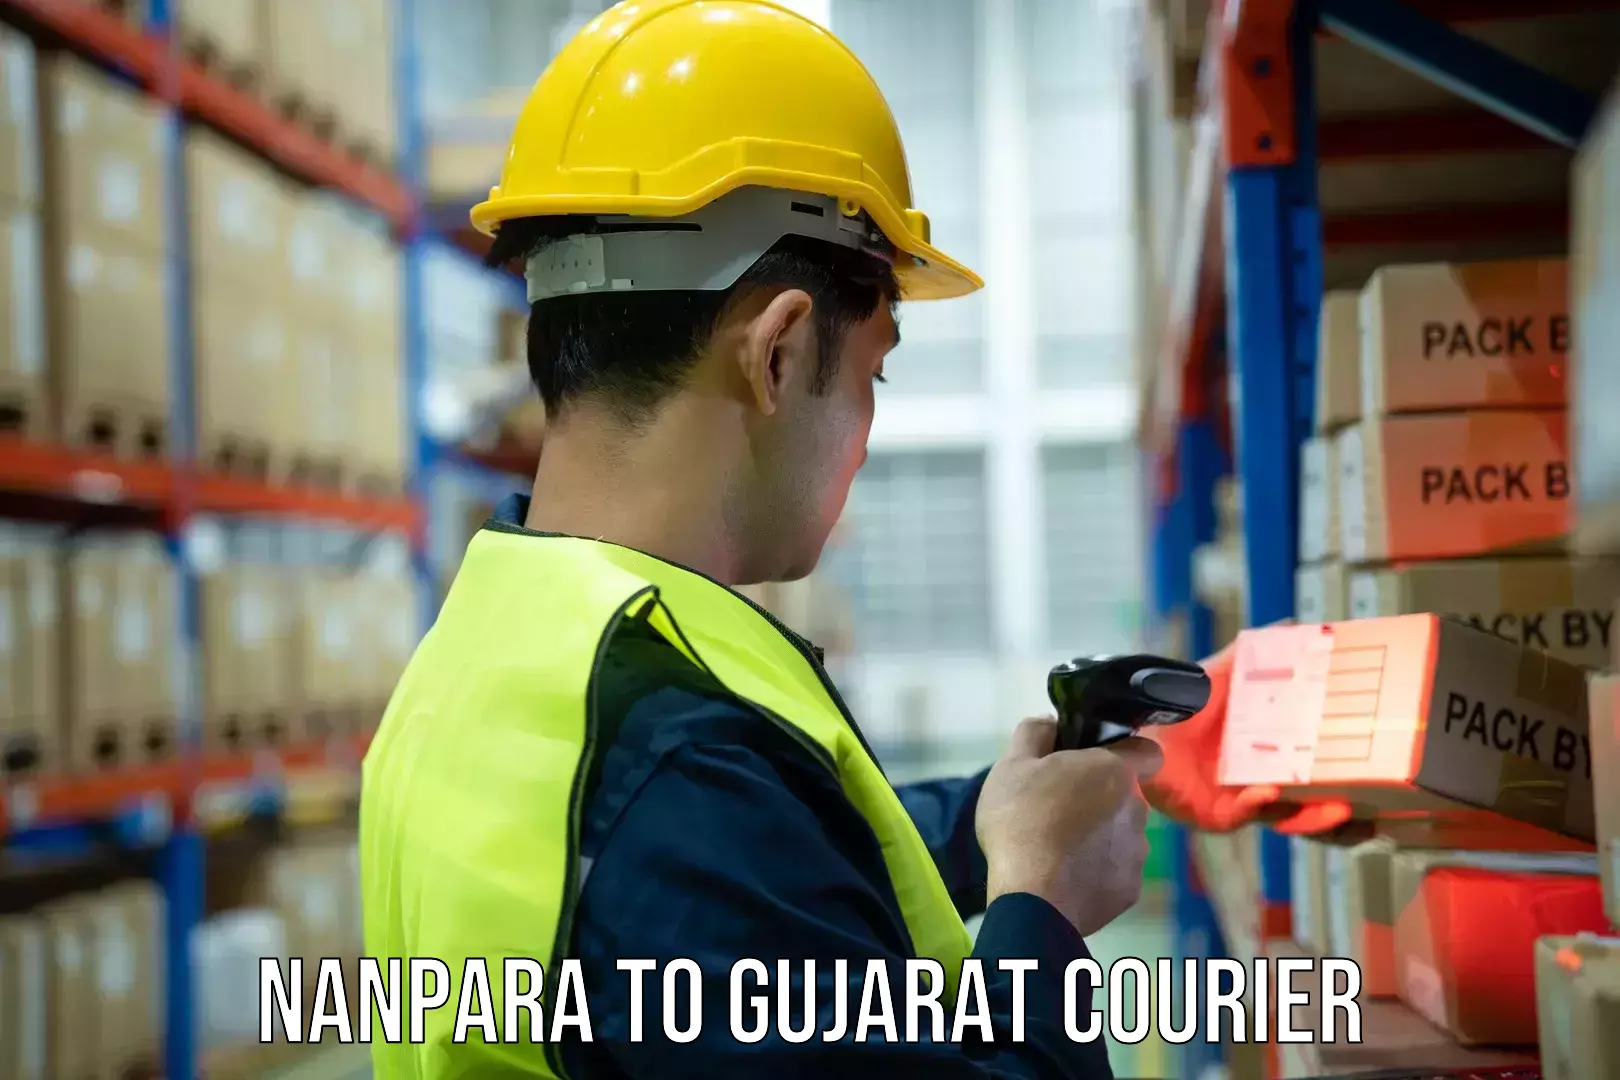 Fast delivery service Nanpara to Gujarat